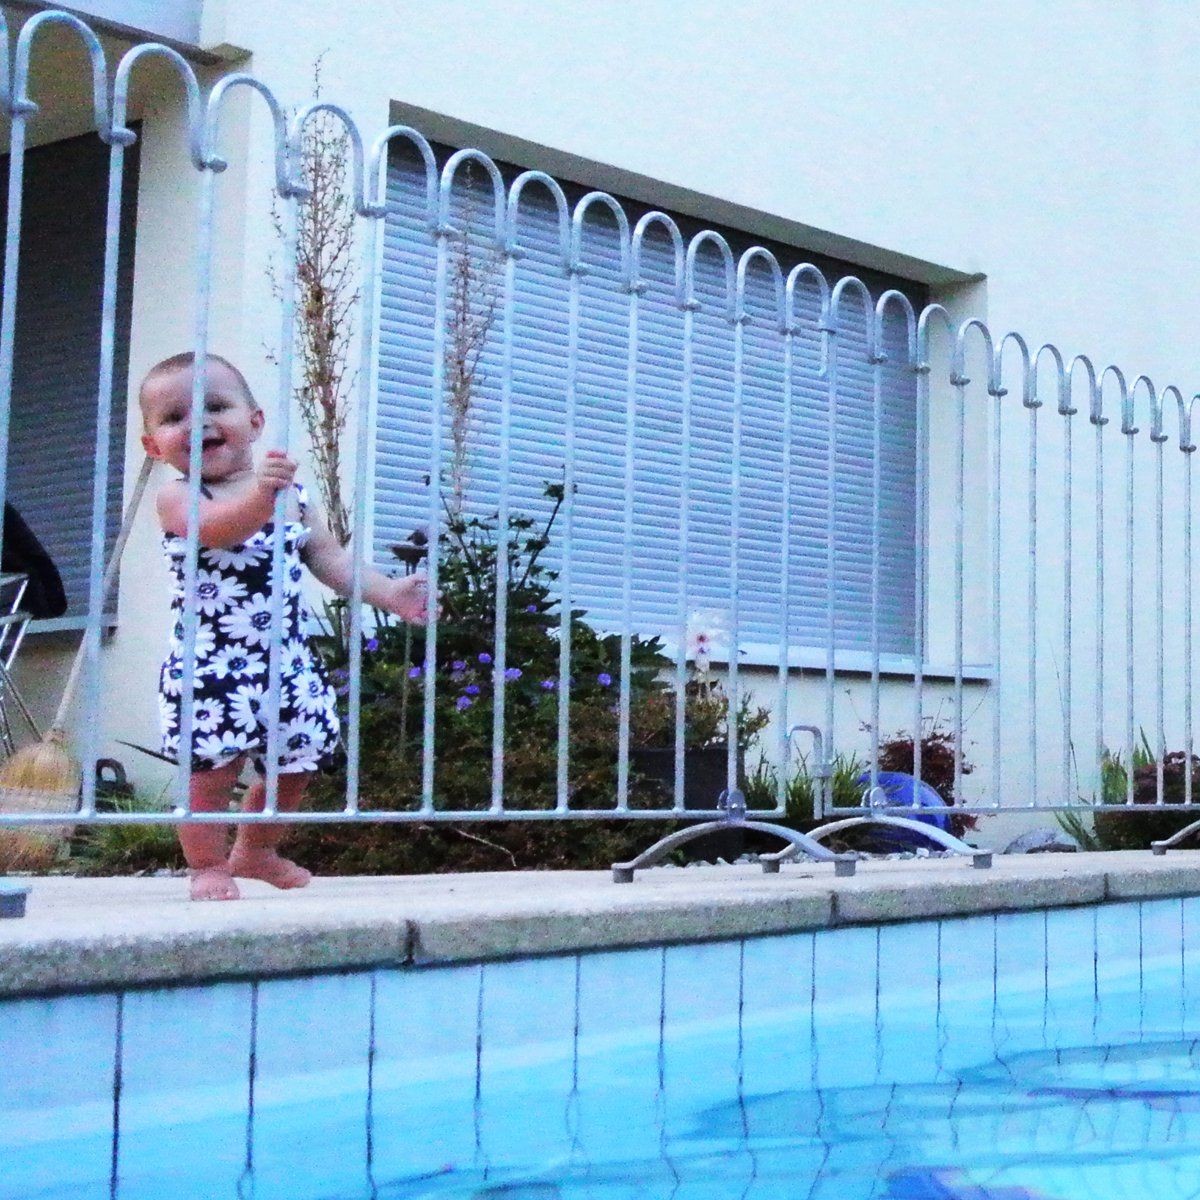 Recinzione di sicurezza per bambini da 1 m / recinzione per piscina (zincata)